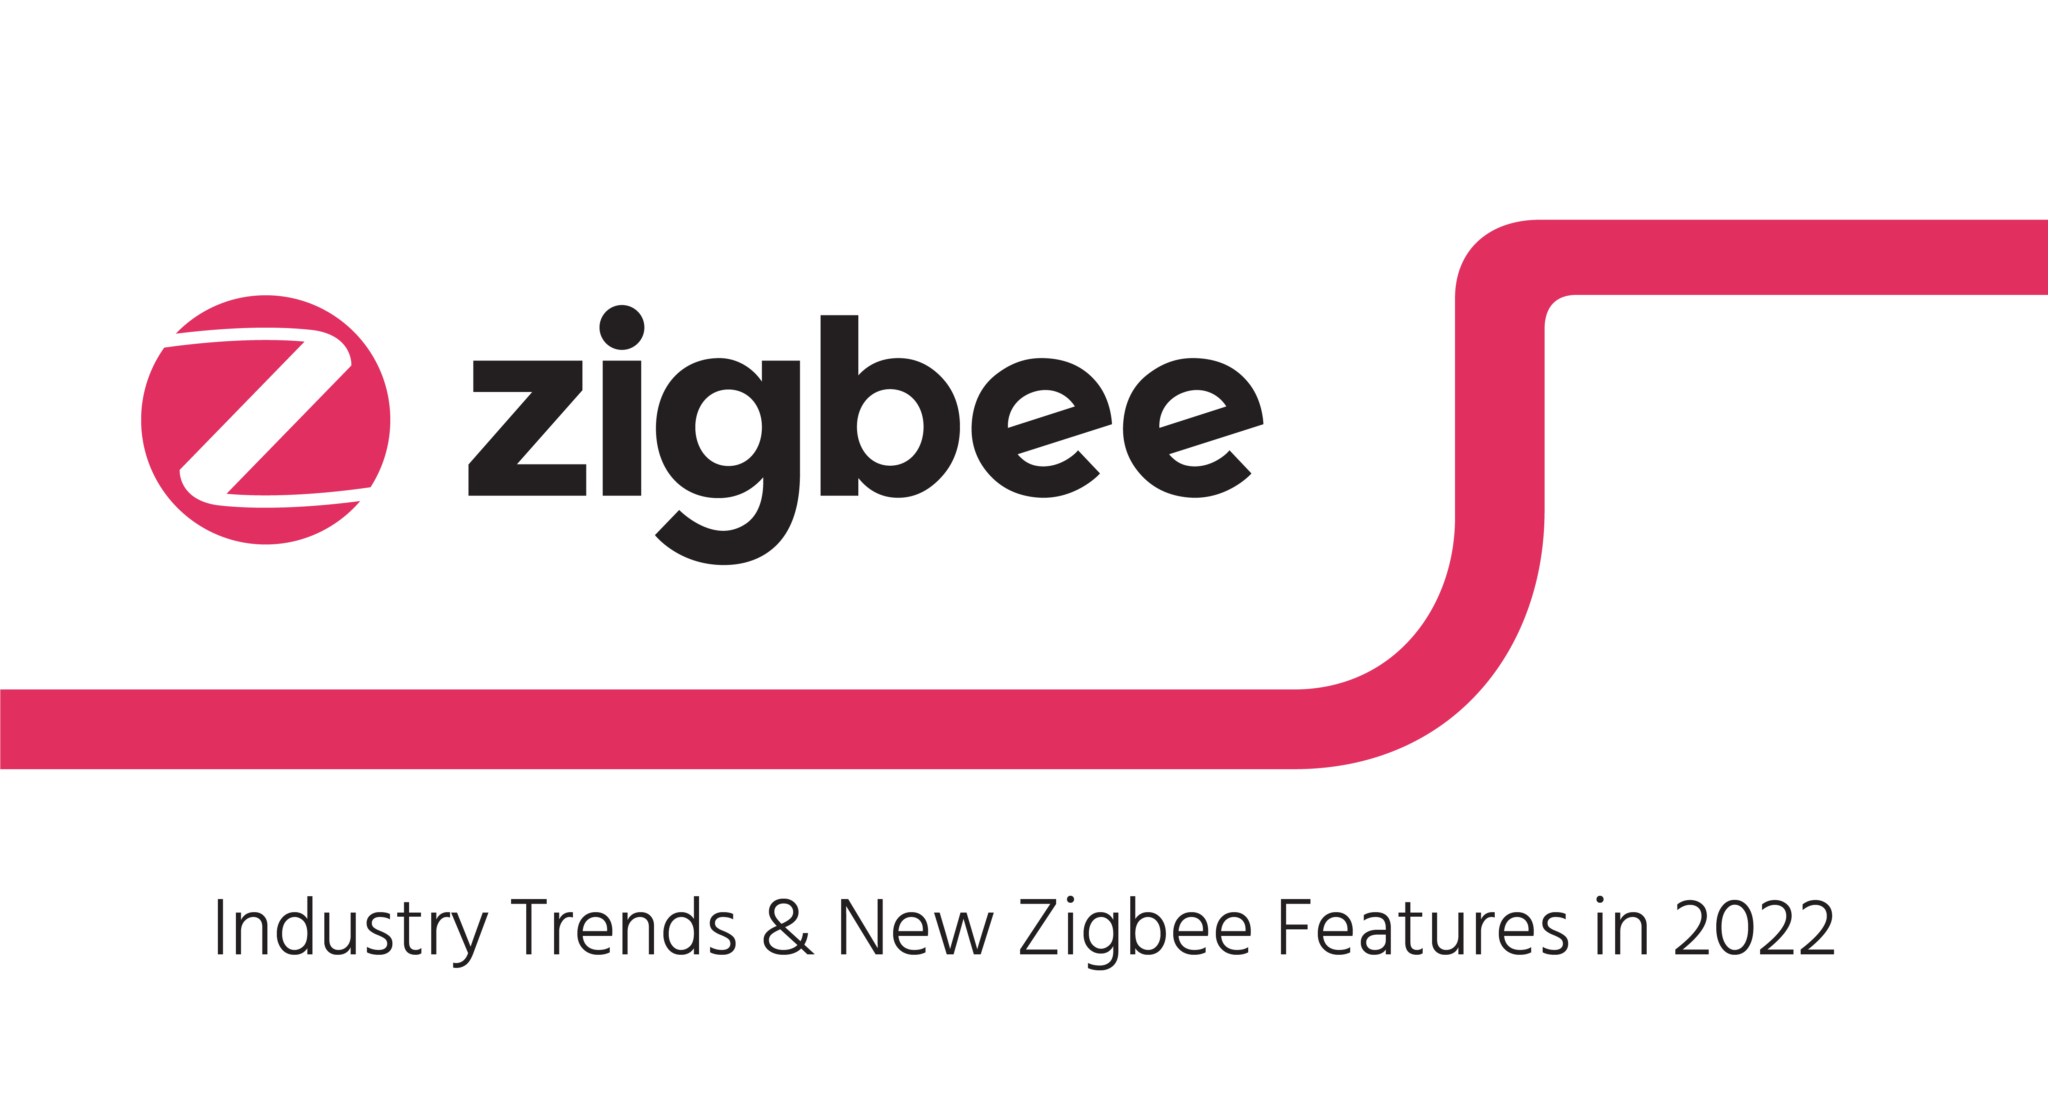 Zigbee Communication Networks for Utility Communication